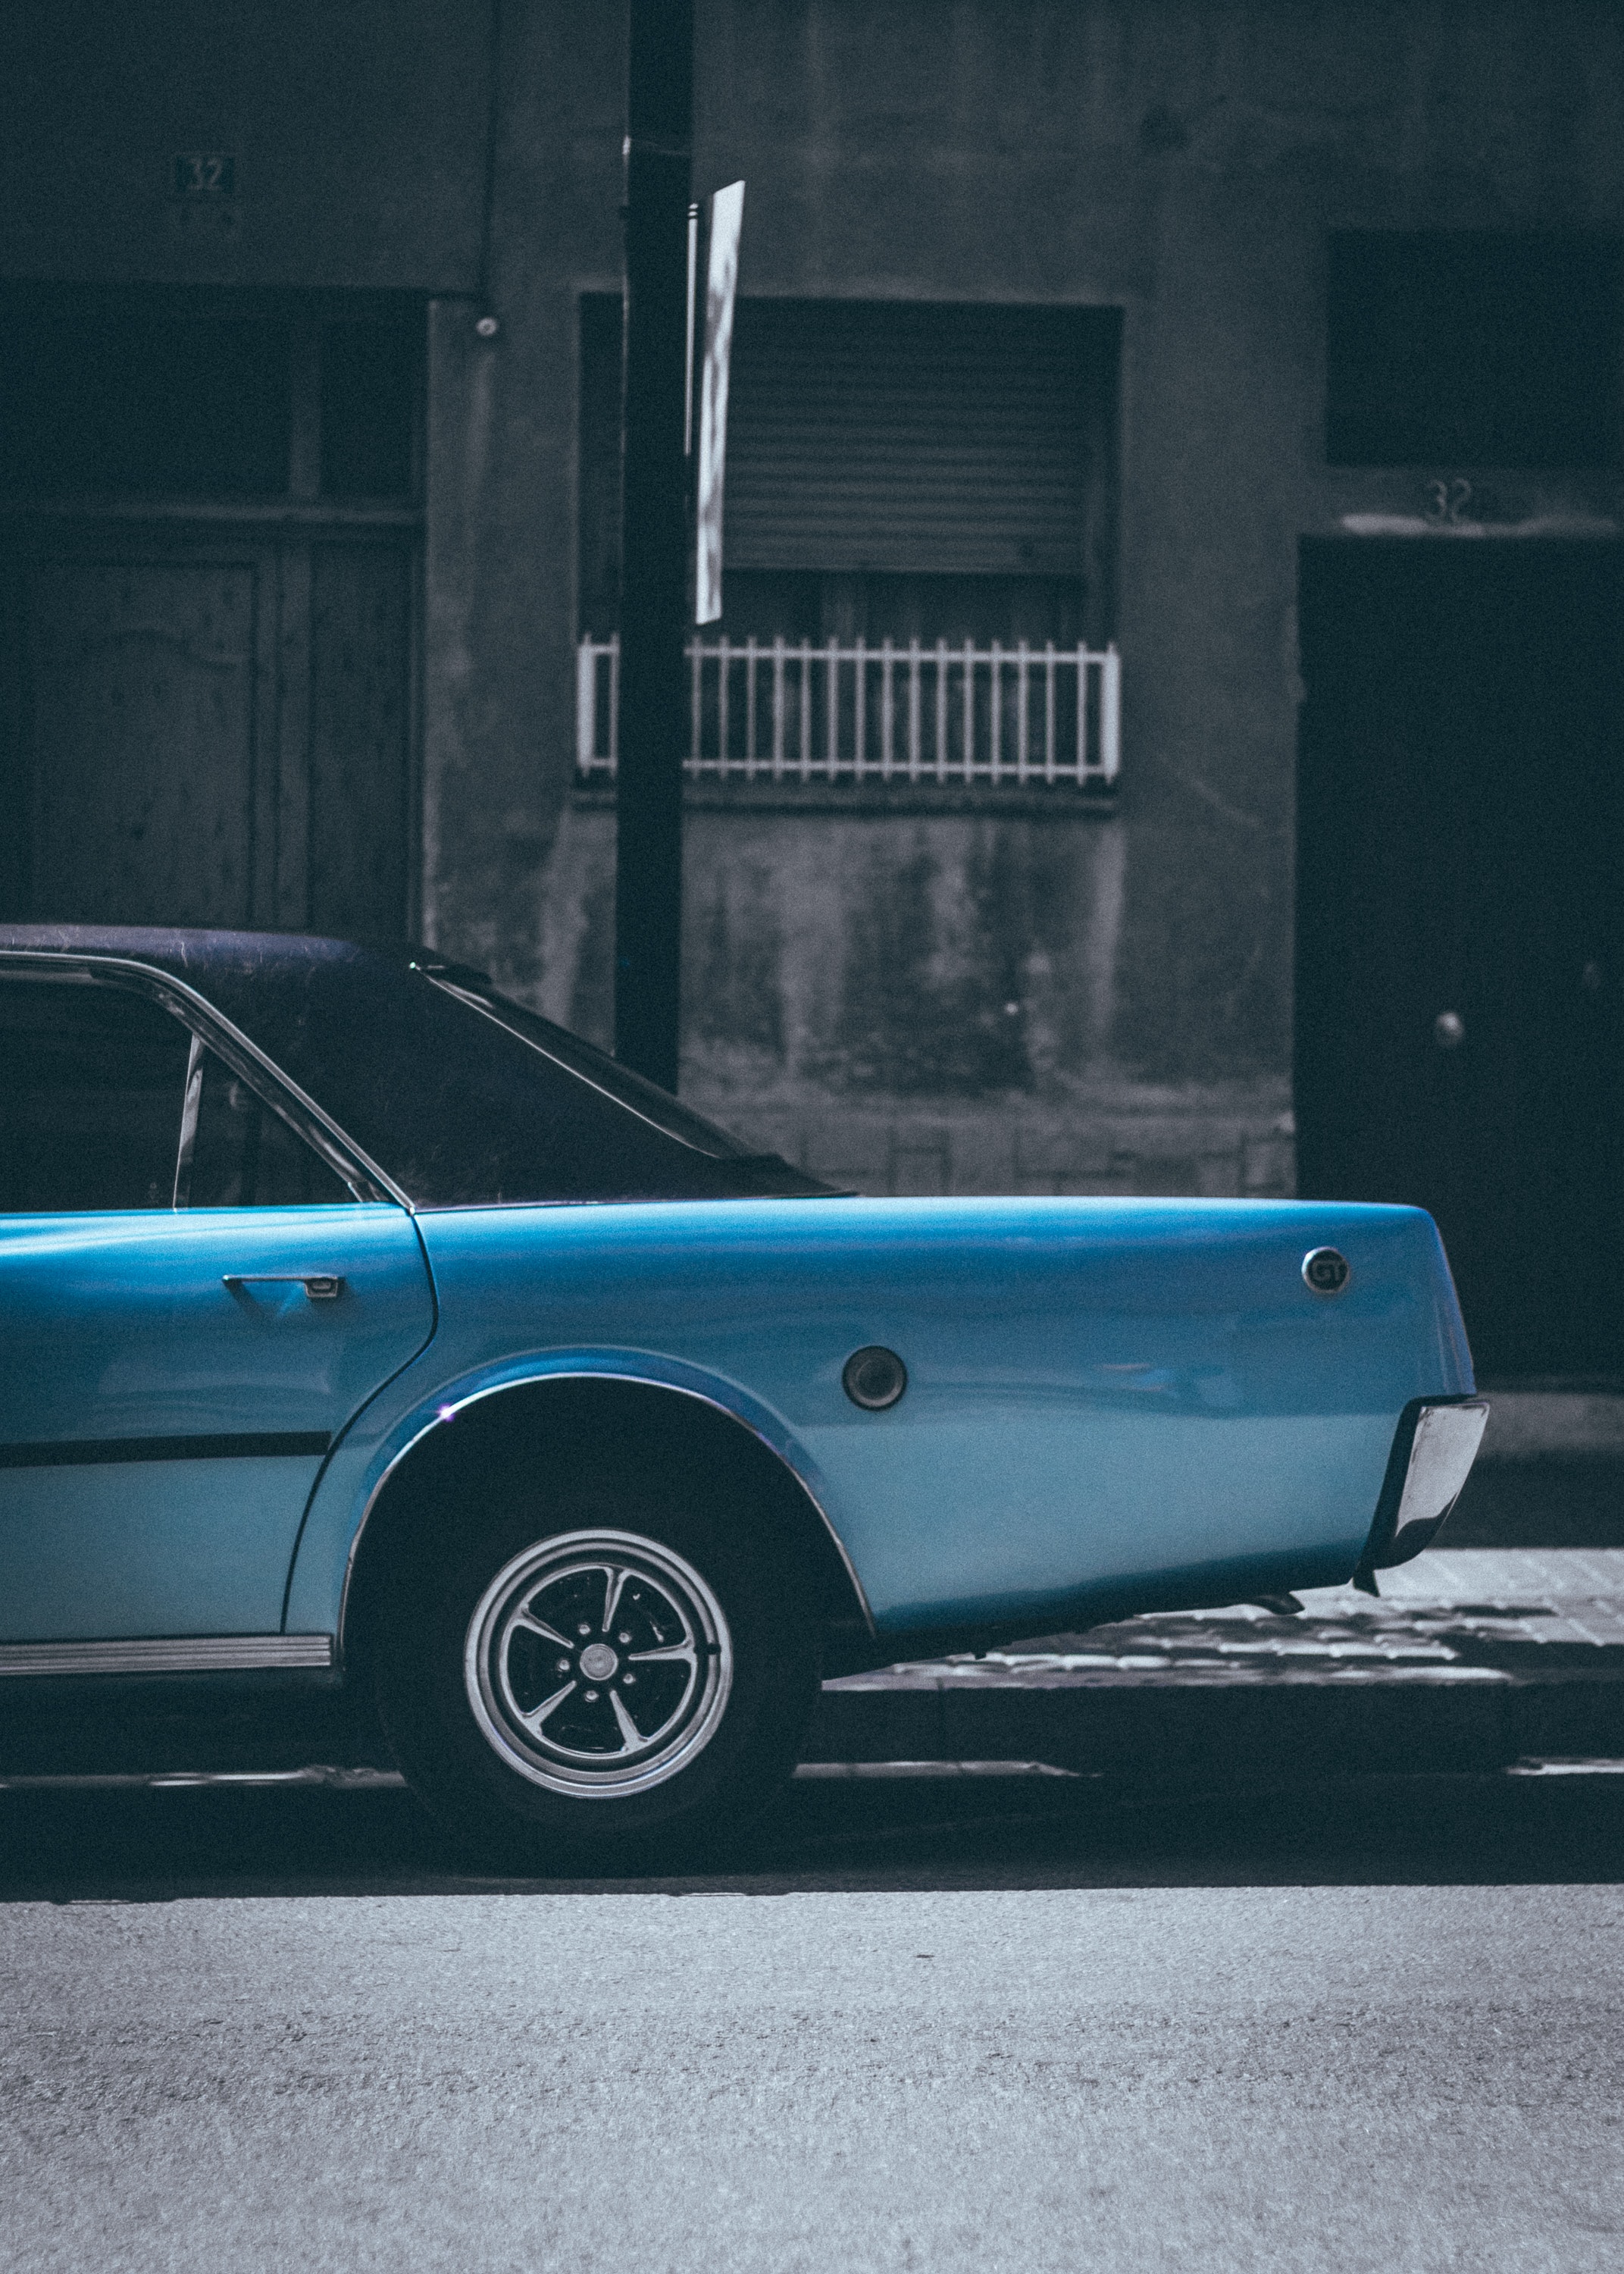 A classic blue sedan parked on the roadside